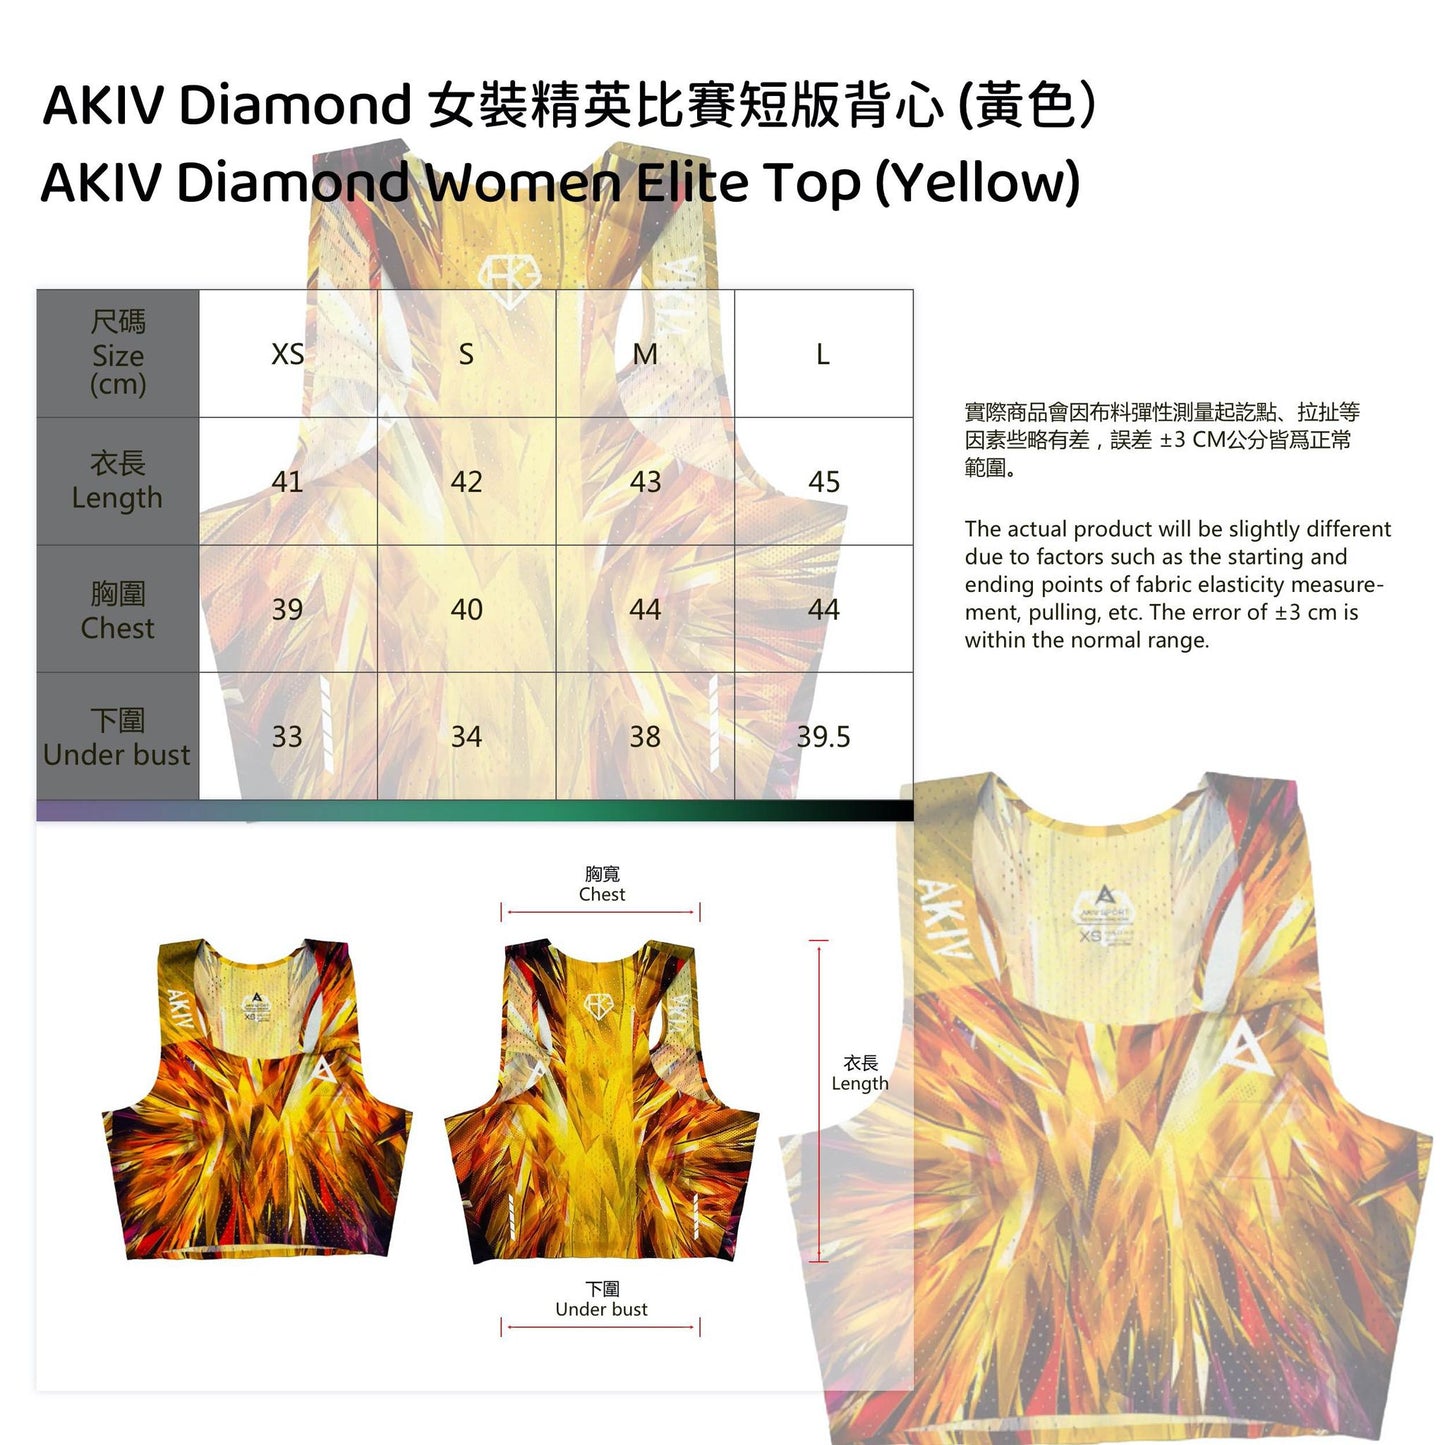 AKIV Diamond Women Elite Top (Gold)